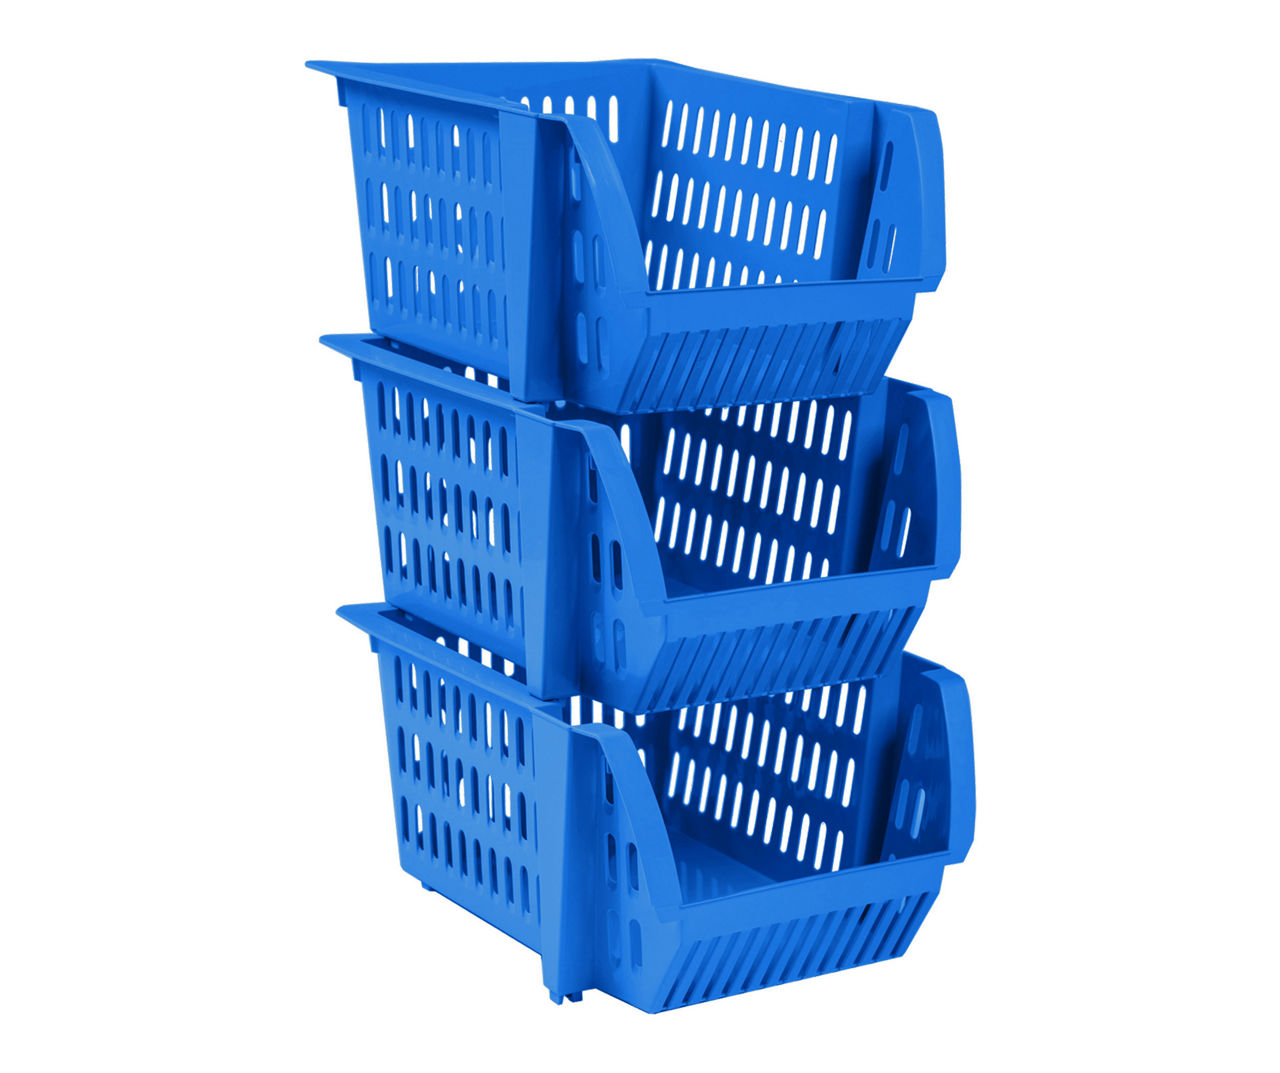 Get Organized With Home Storage Bins & Baskets